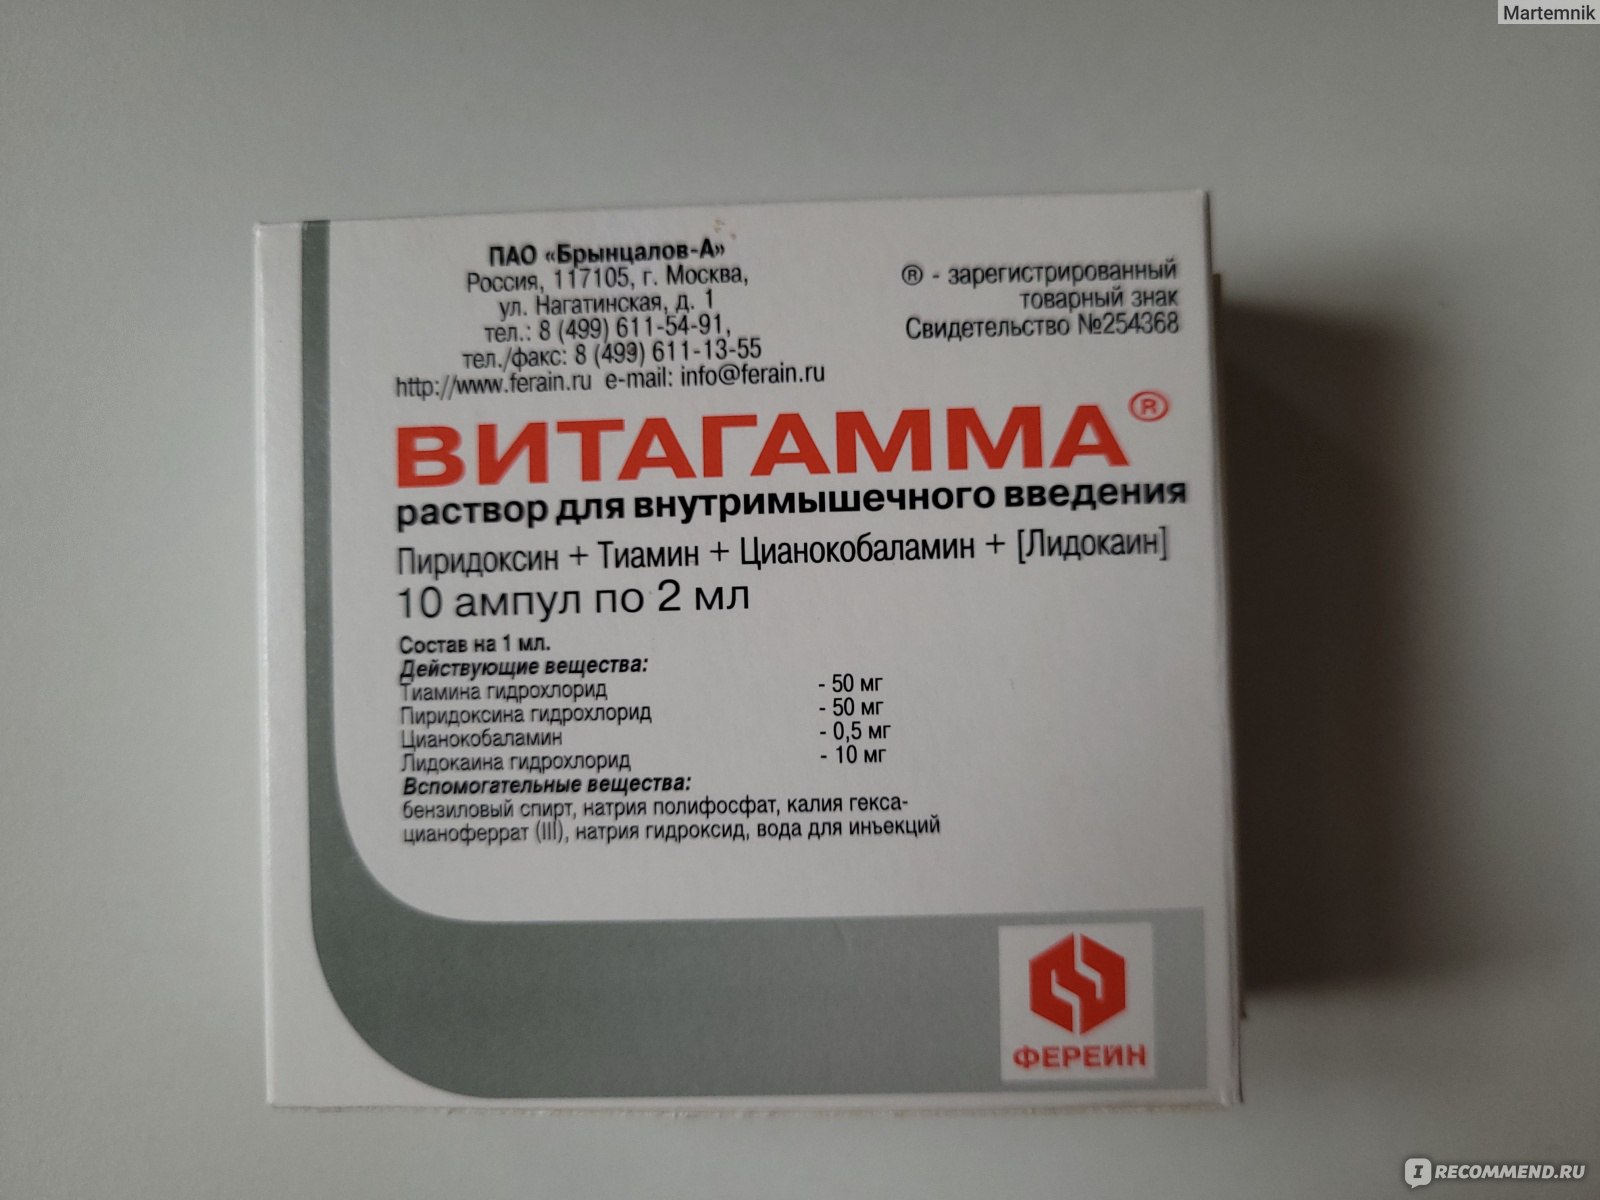 Витамины ПАО «Брынцалов-А» (Ферейн) Витагамма - «Один укол вместо трёх .